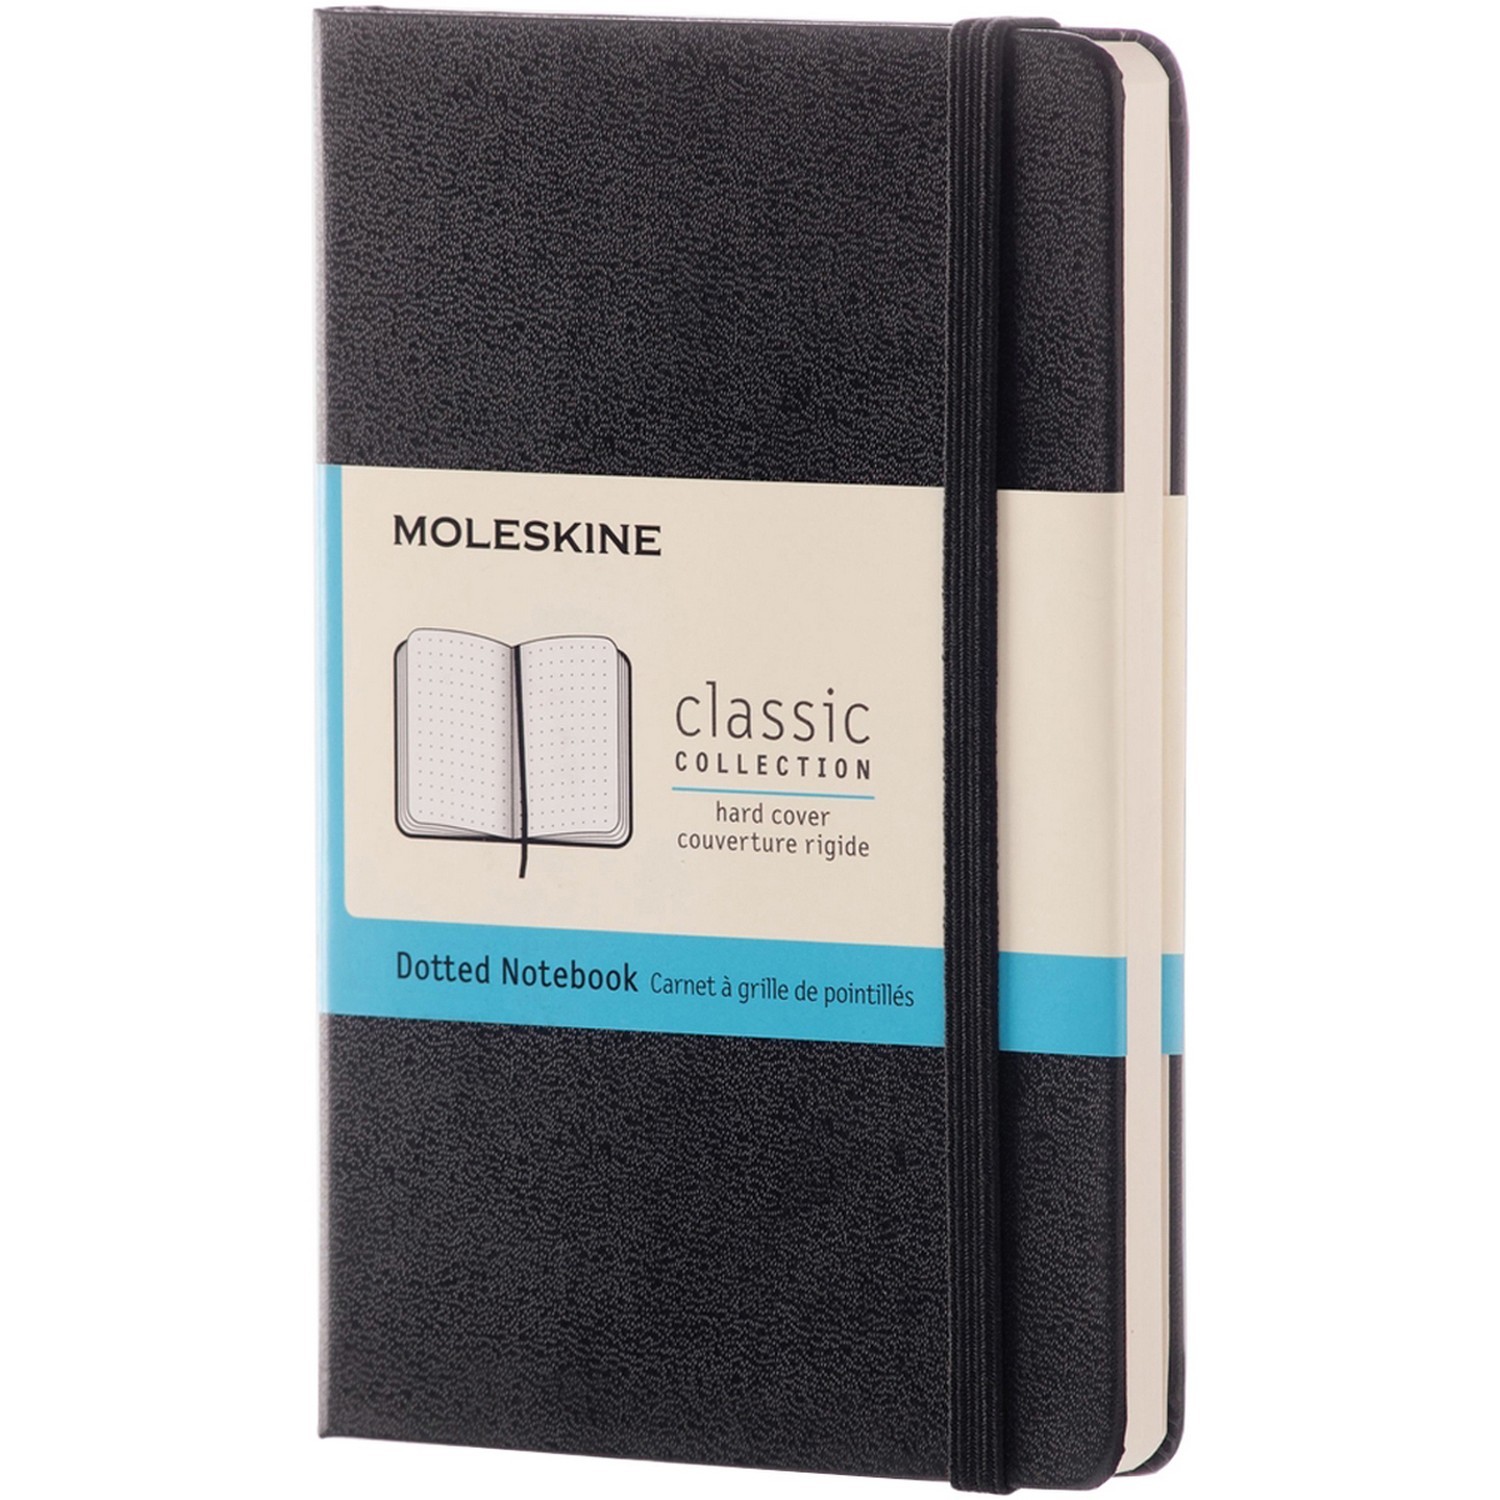 EAN 8051272895285 product image for Moleskine Classic Hard Cover Notebook-Black Dot, Black | upcitemdb.com